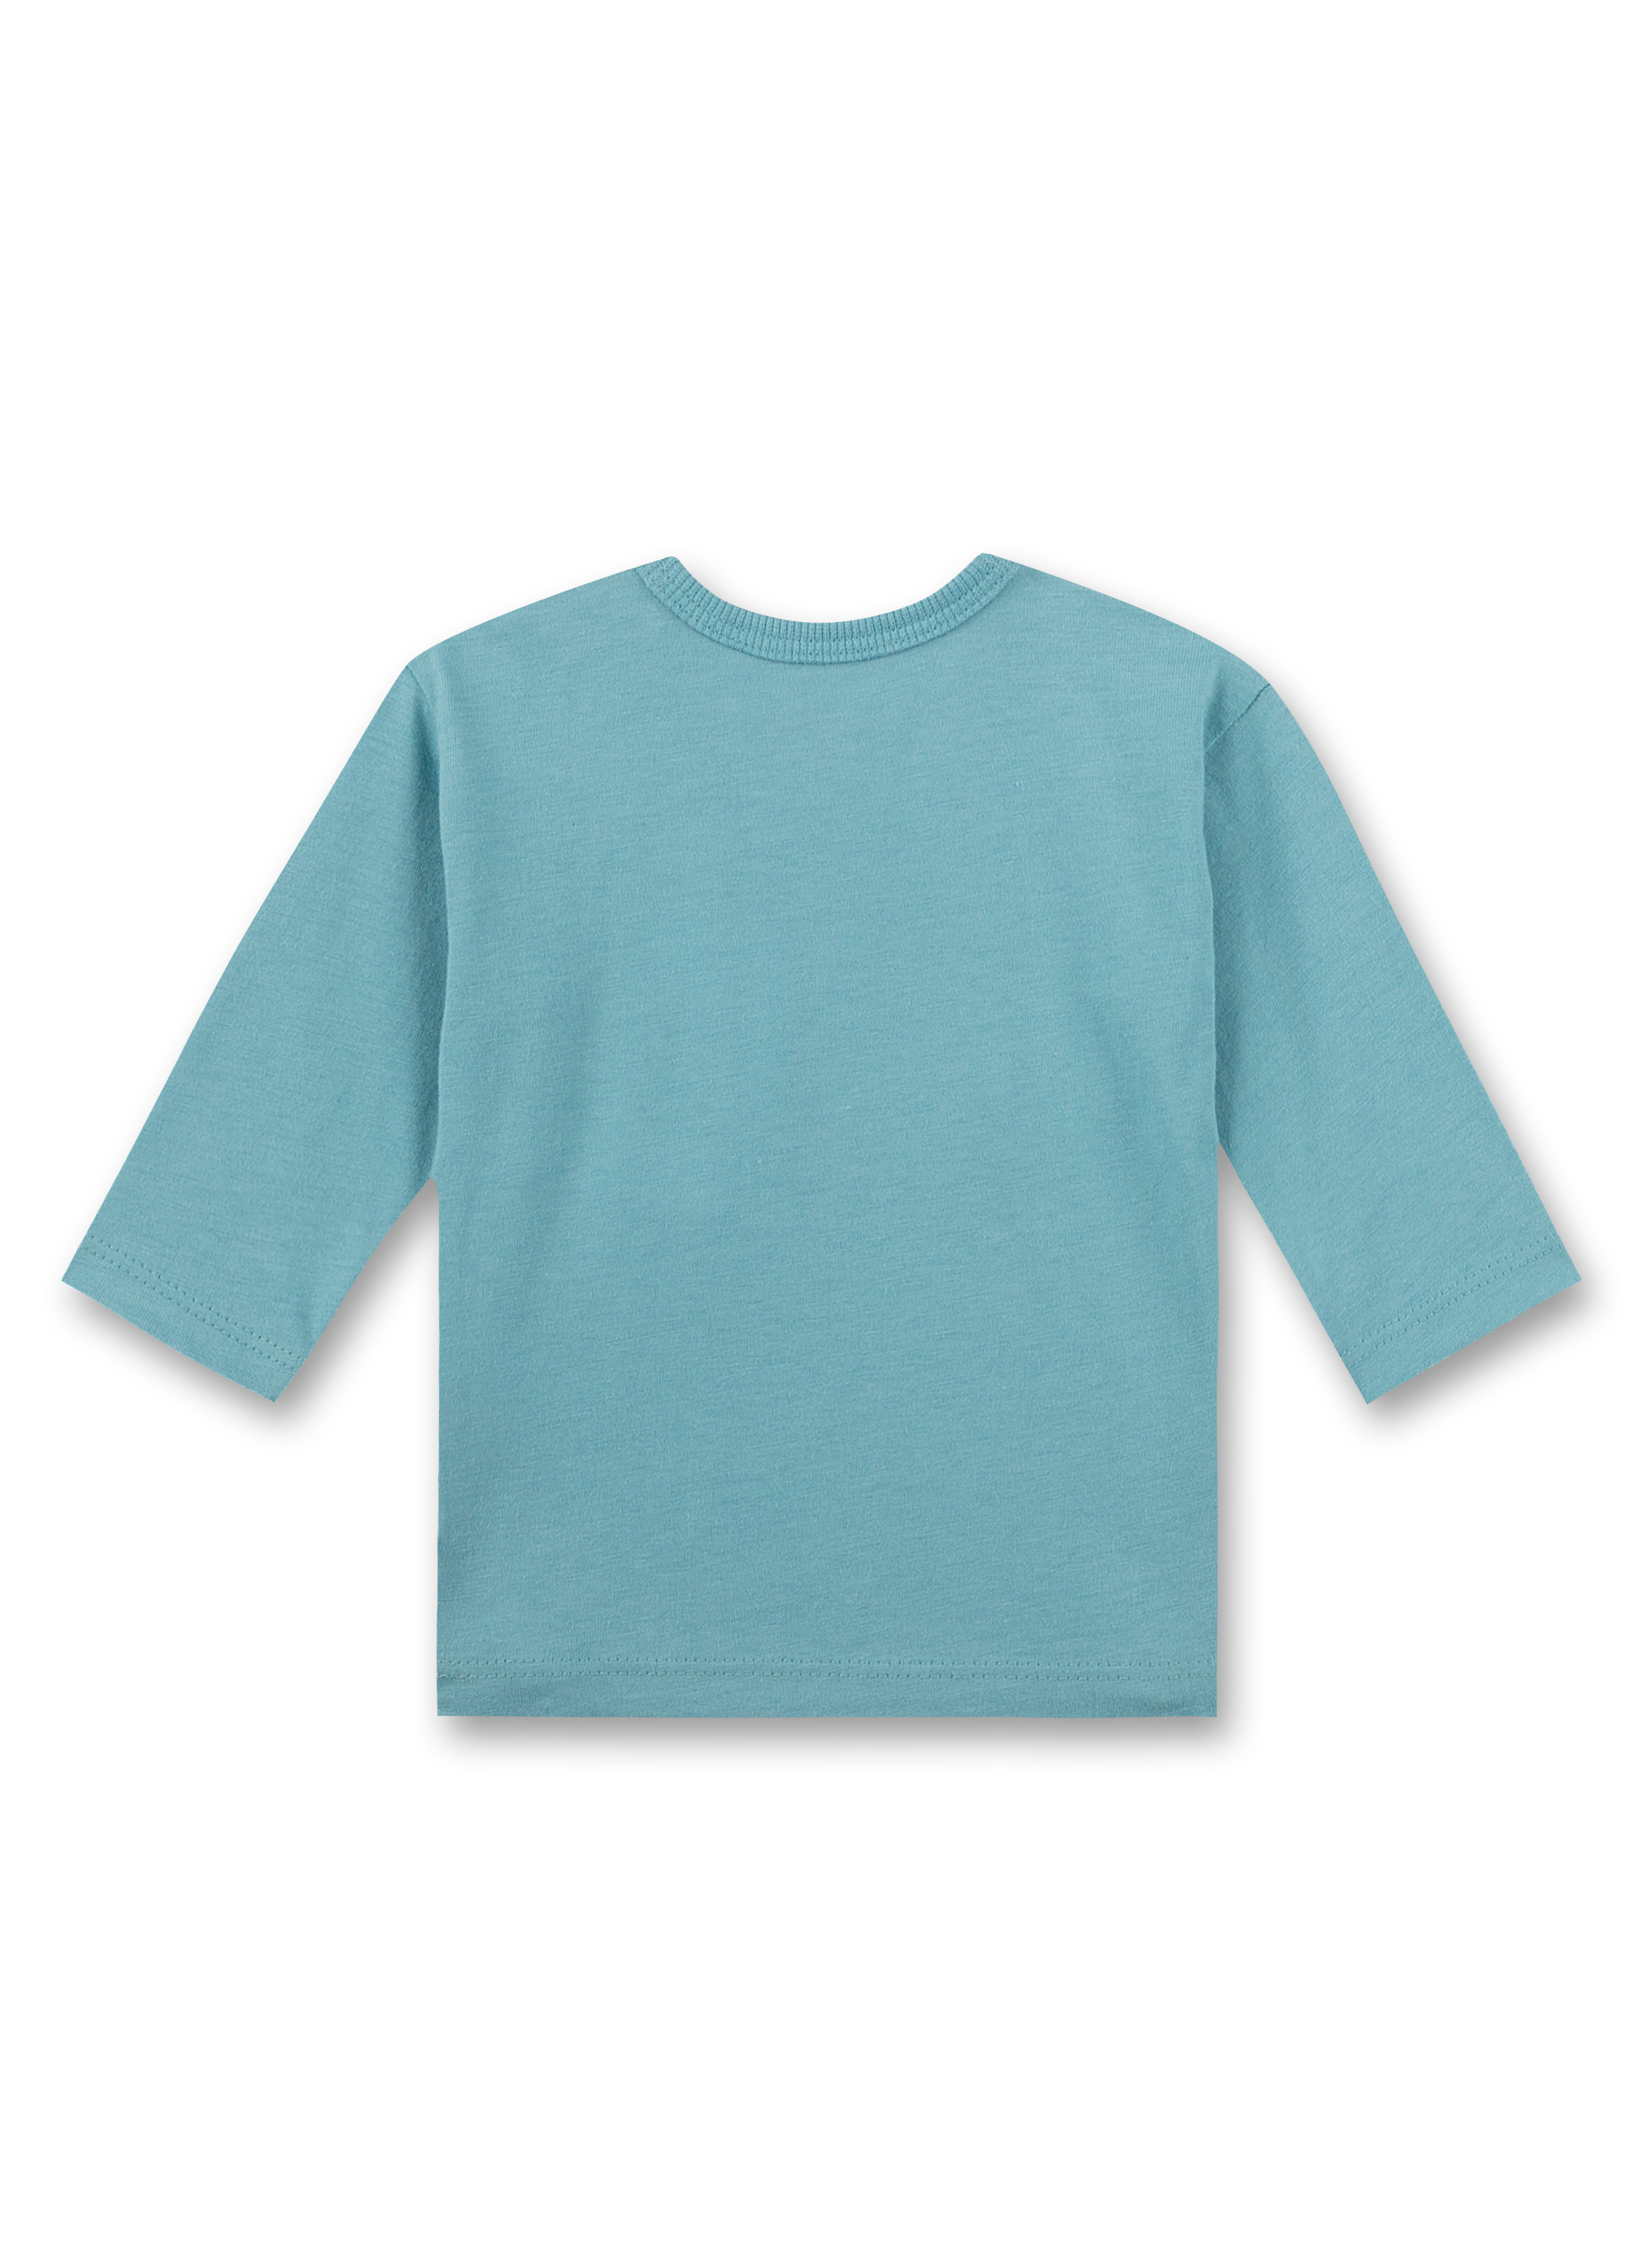 Unisex-Shirt langarm Blau 